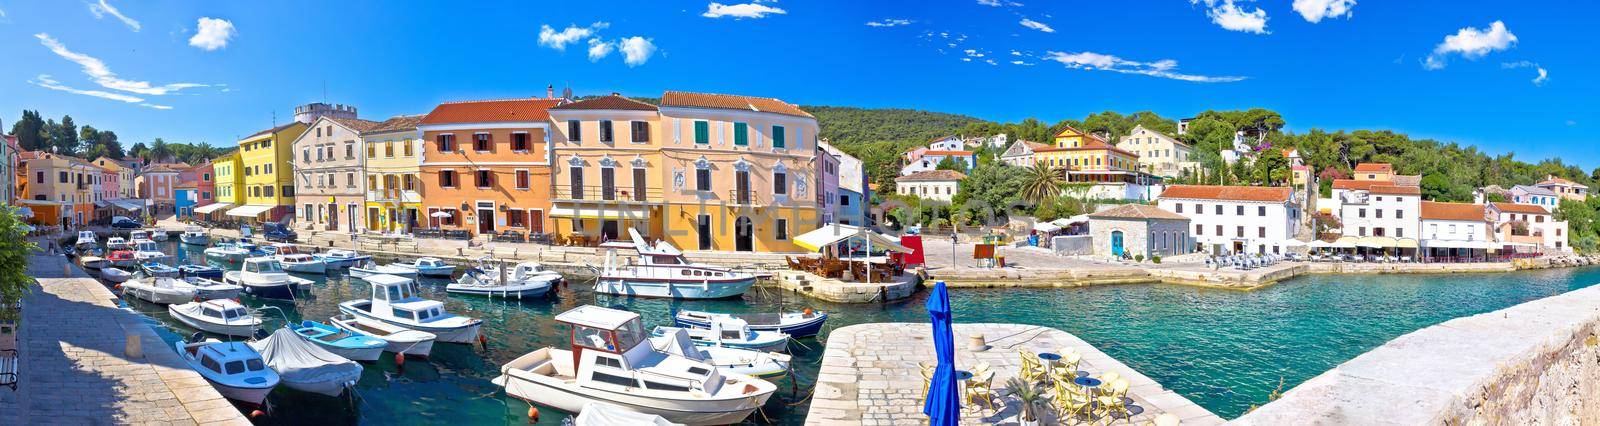 Island of Losinj. Veli Losinj harbor and colorful architecture panoramic view. Kvarner archipelago of Croatia.